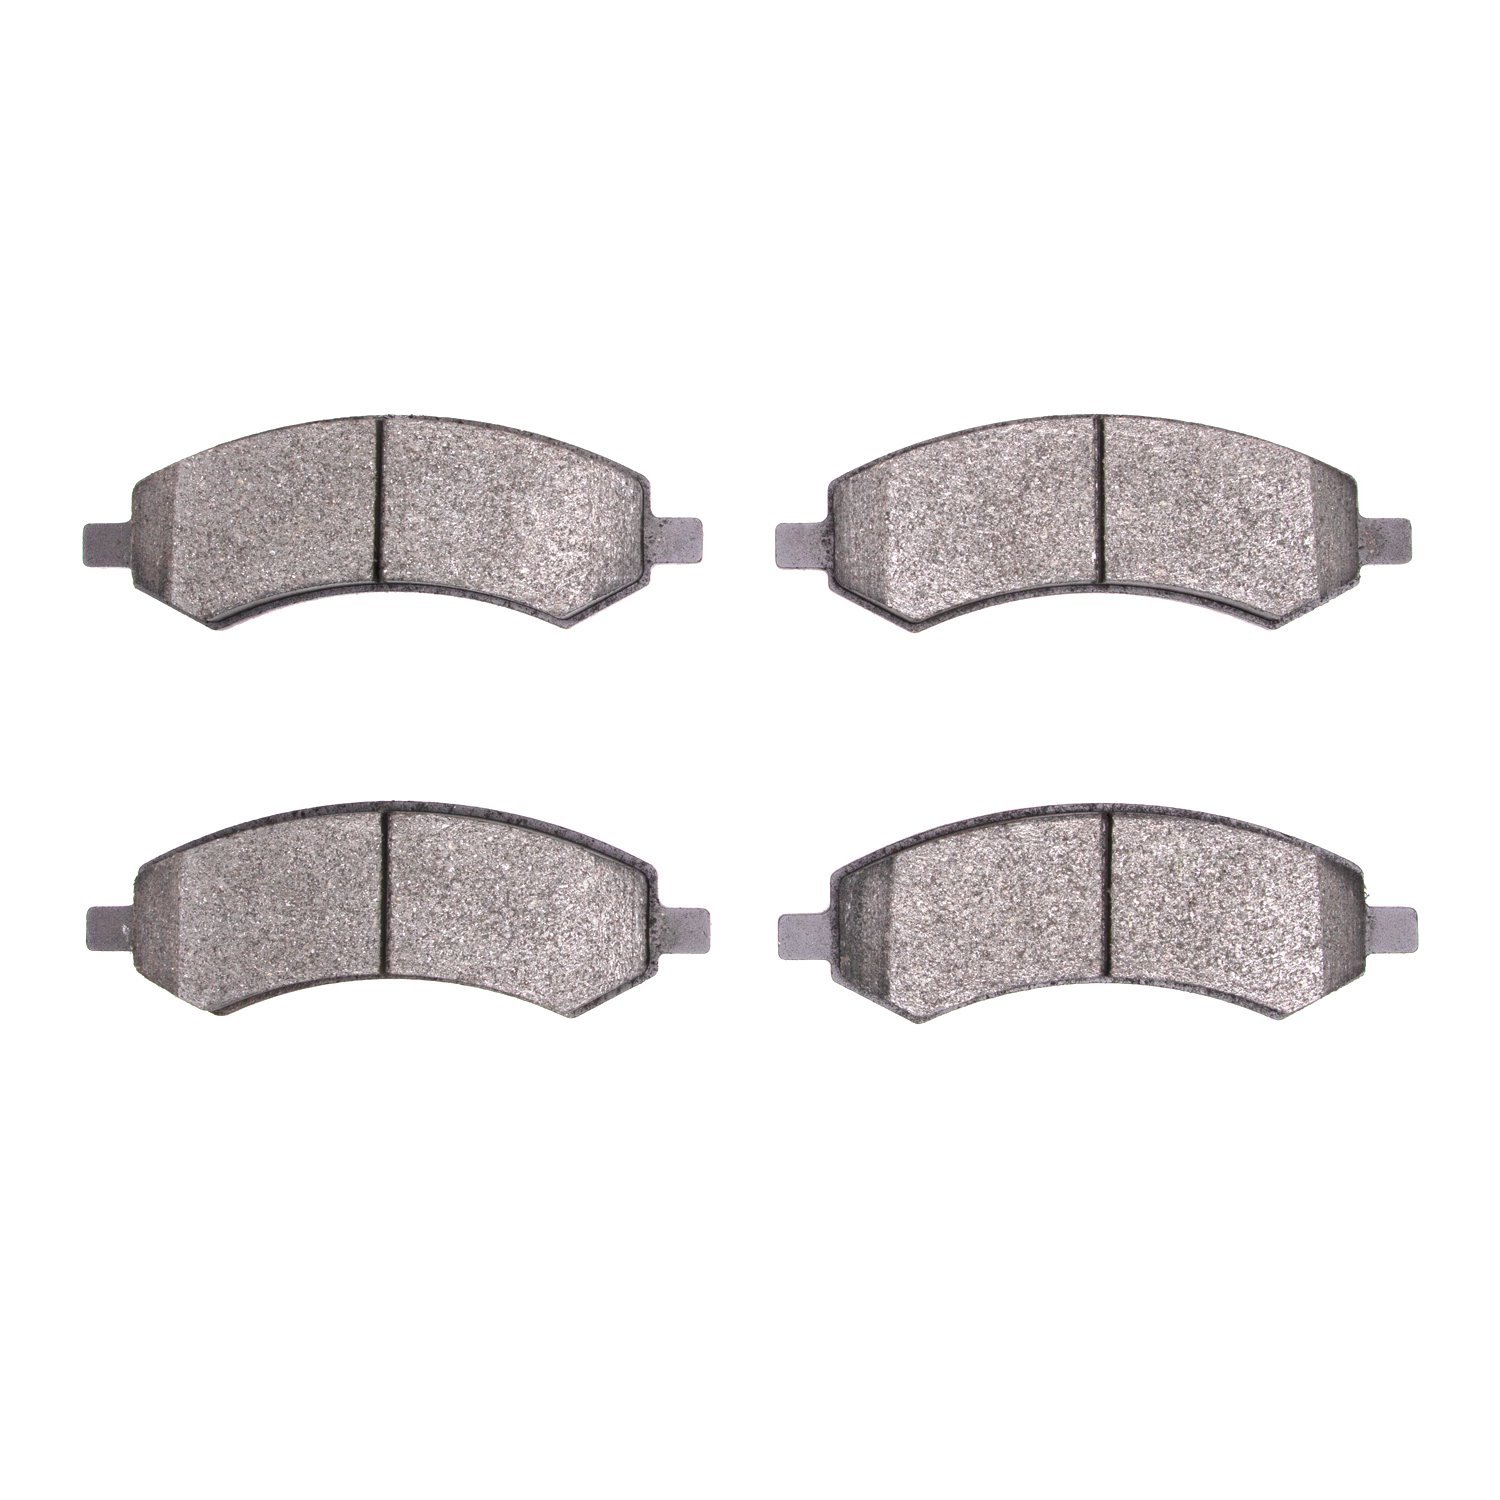 Ceramic Brake Pads, Fits Select Fits Multiple Makes/Models, Position: Front